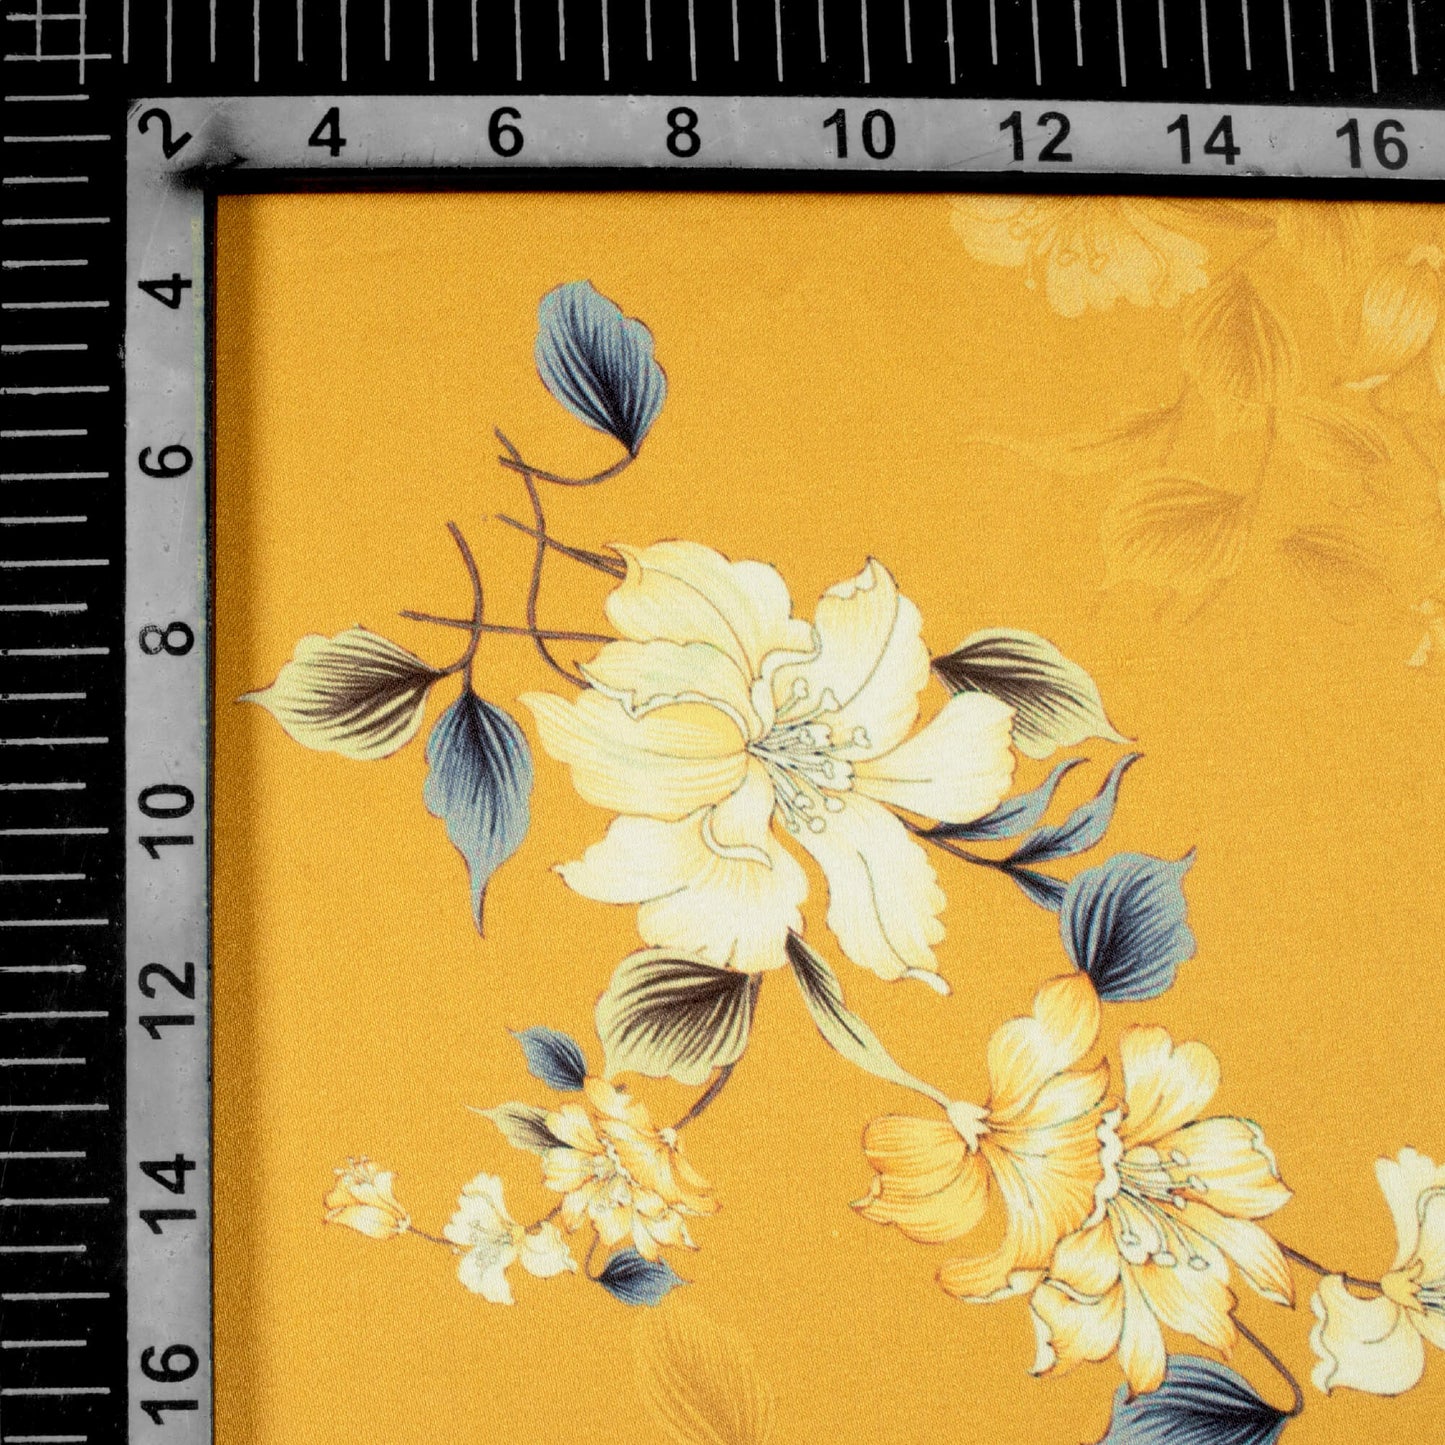 Dijon Yellow And White Floral Pattern Digital Print Premium Lush Satin Fabric